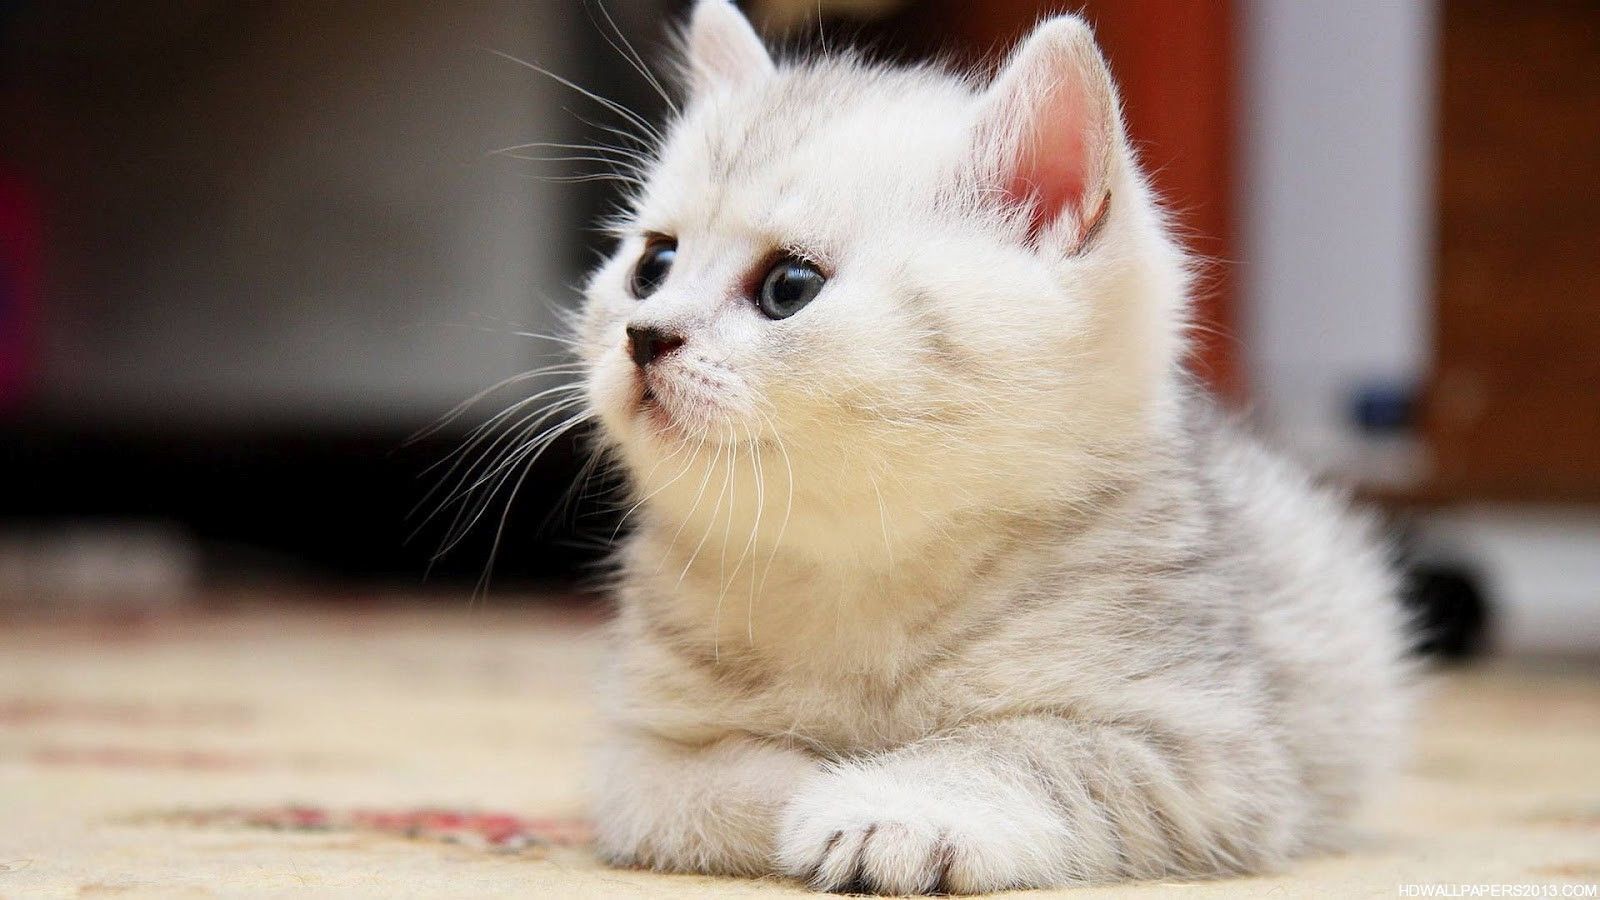 Cute Persian Cat 3D Wallpaper. Cute baby cats, Kittens cutest, Cats and kittens